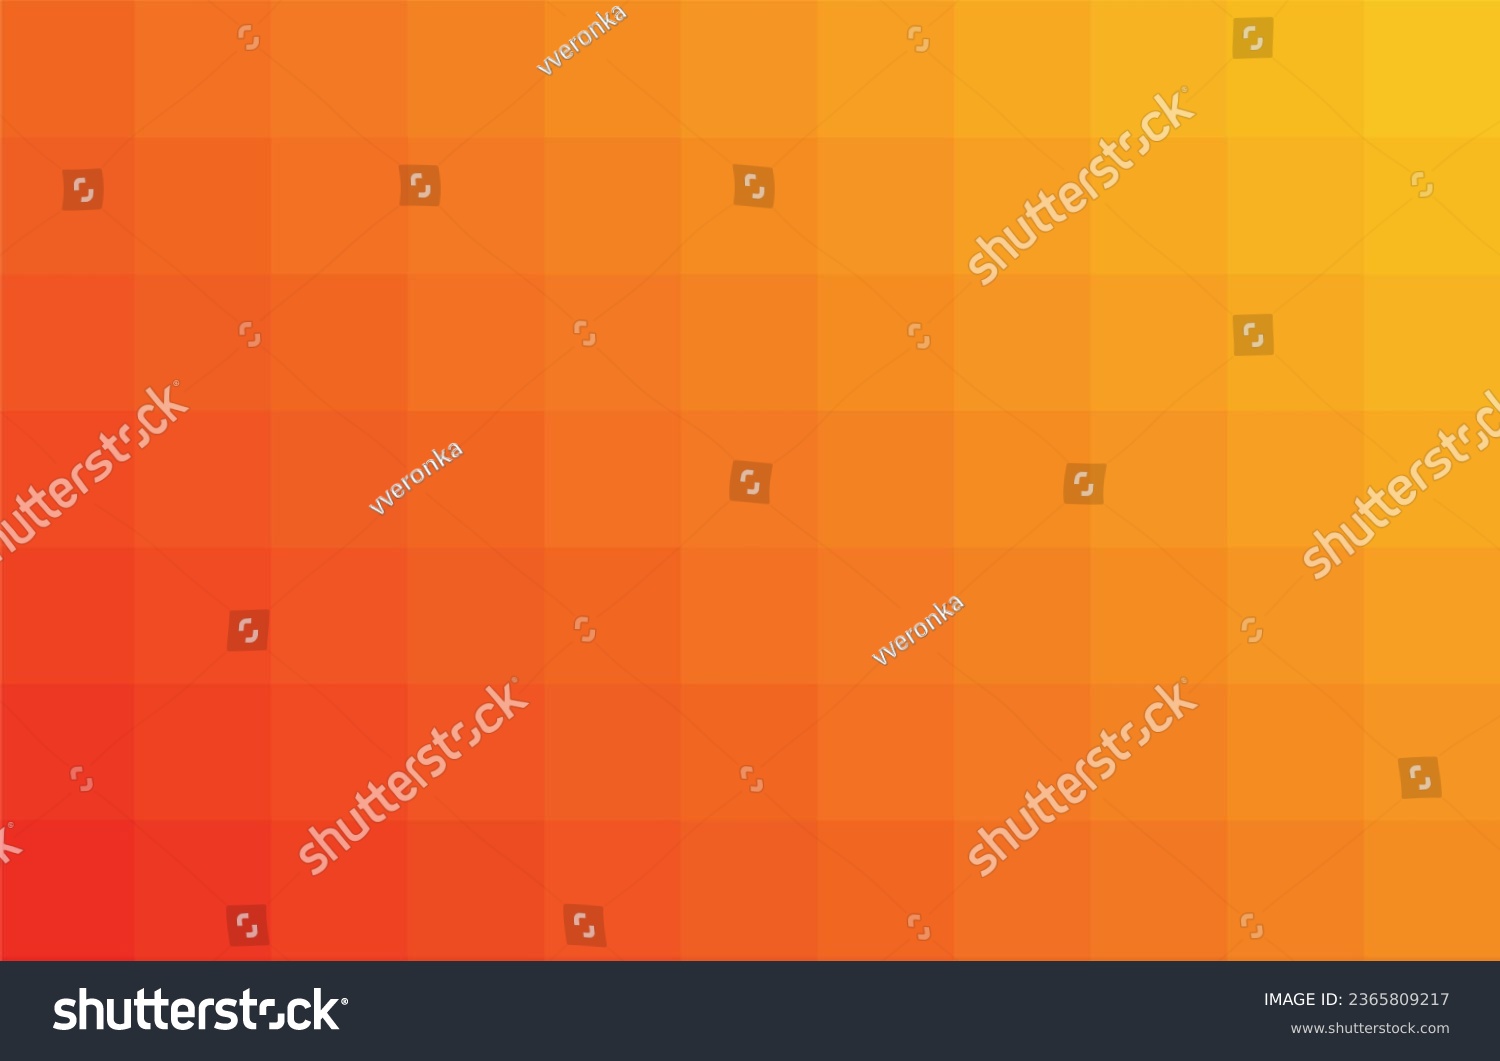 Vector gradient orange background. Abstract texture of the orange squares for publication, design, poster, calendar, post, screensaver, wallpaper, postcard, cover, banner, website. Illustration #2365809217